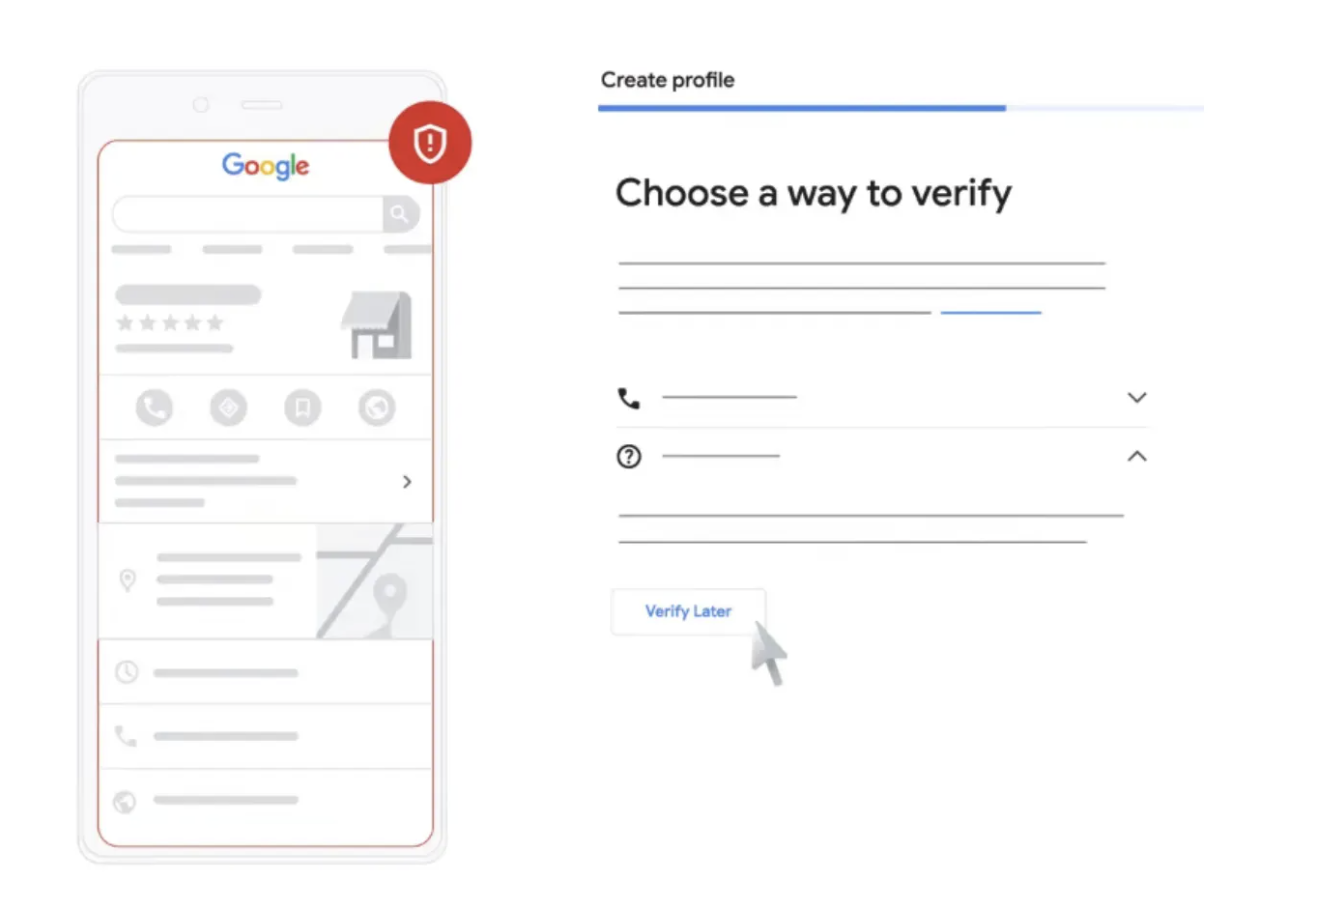 "Choose a way to verify" page